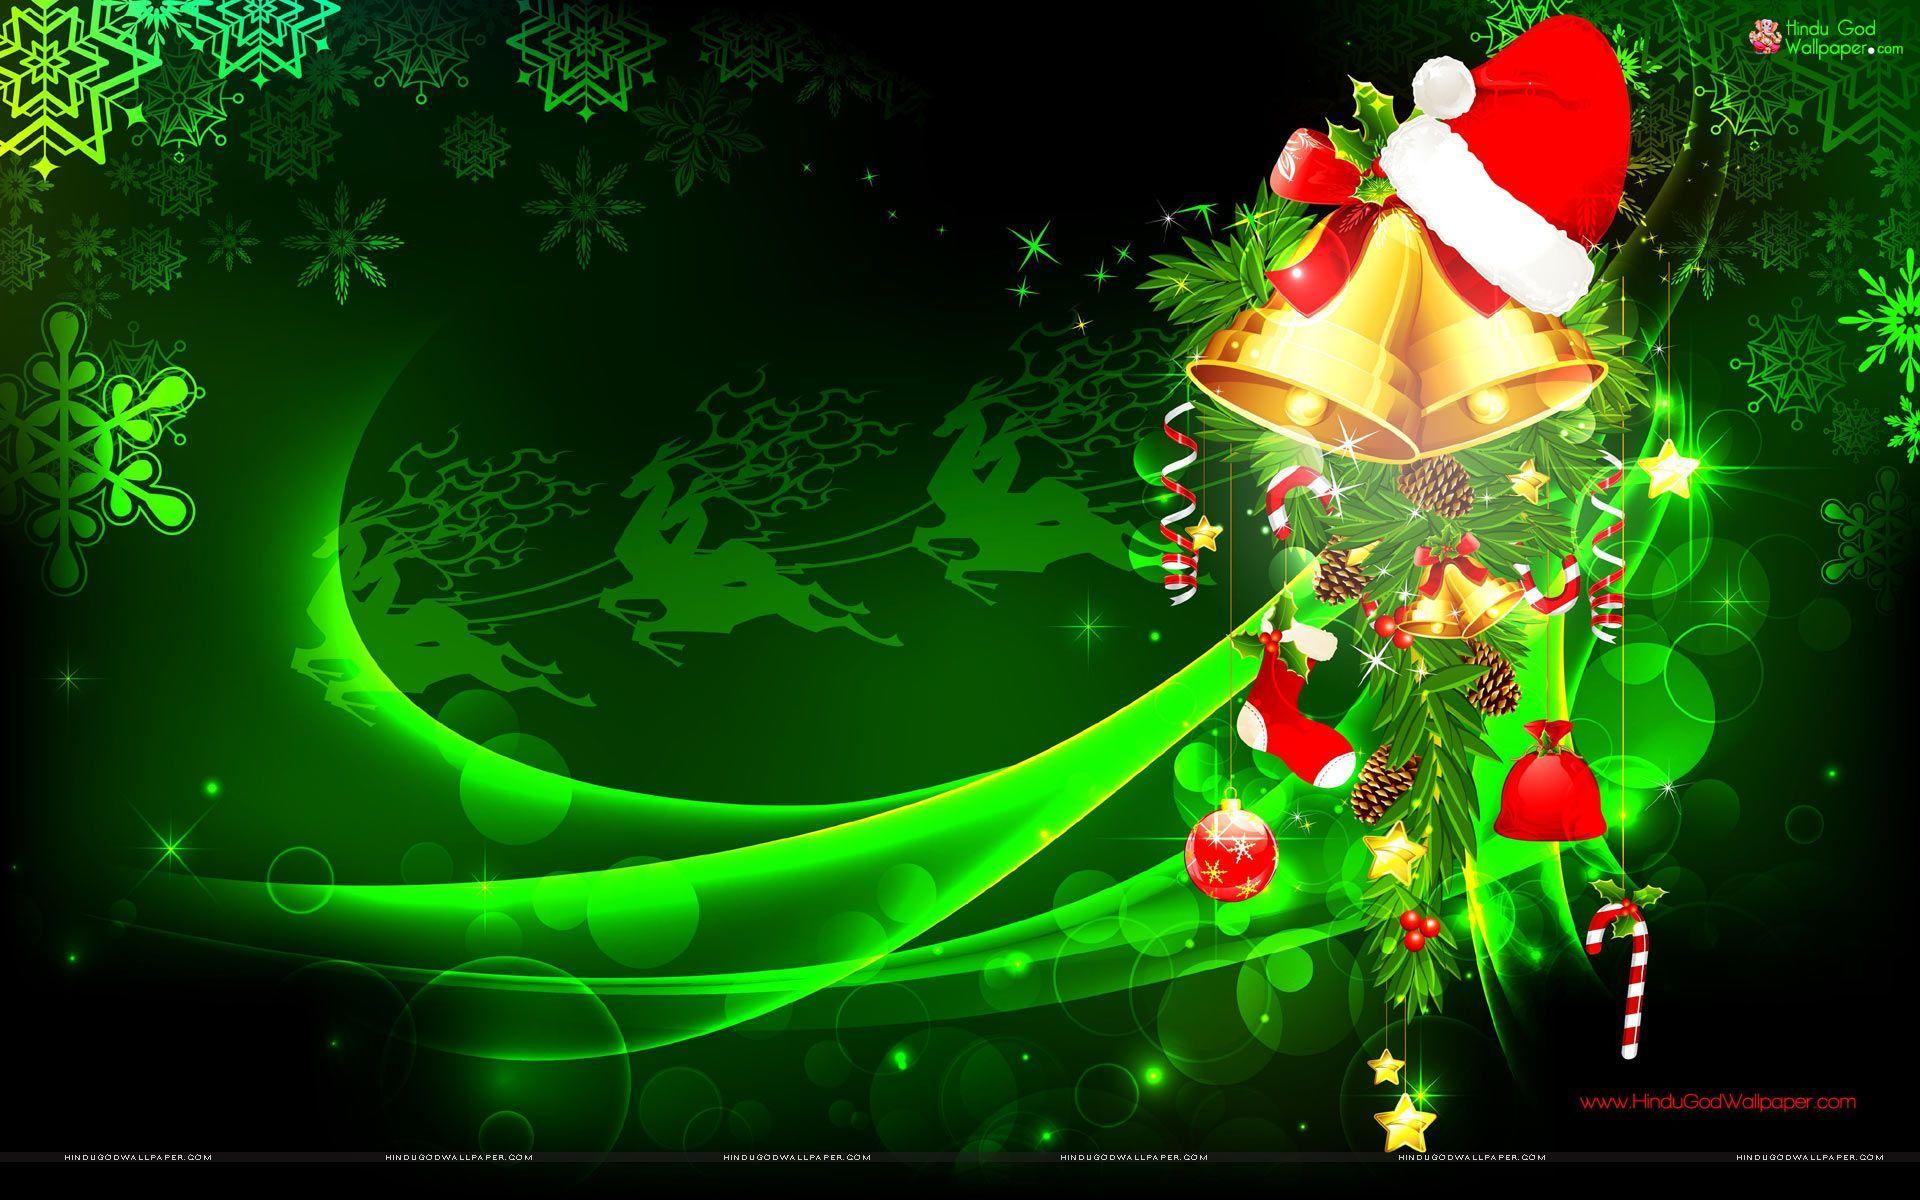 Green Christmas Wallpaper for Desktop Free Download. Christmas wallpaper, Christmas wallpaper background, Christmas background